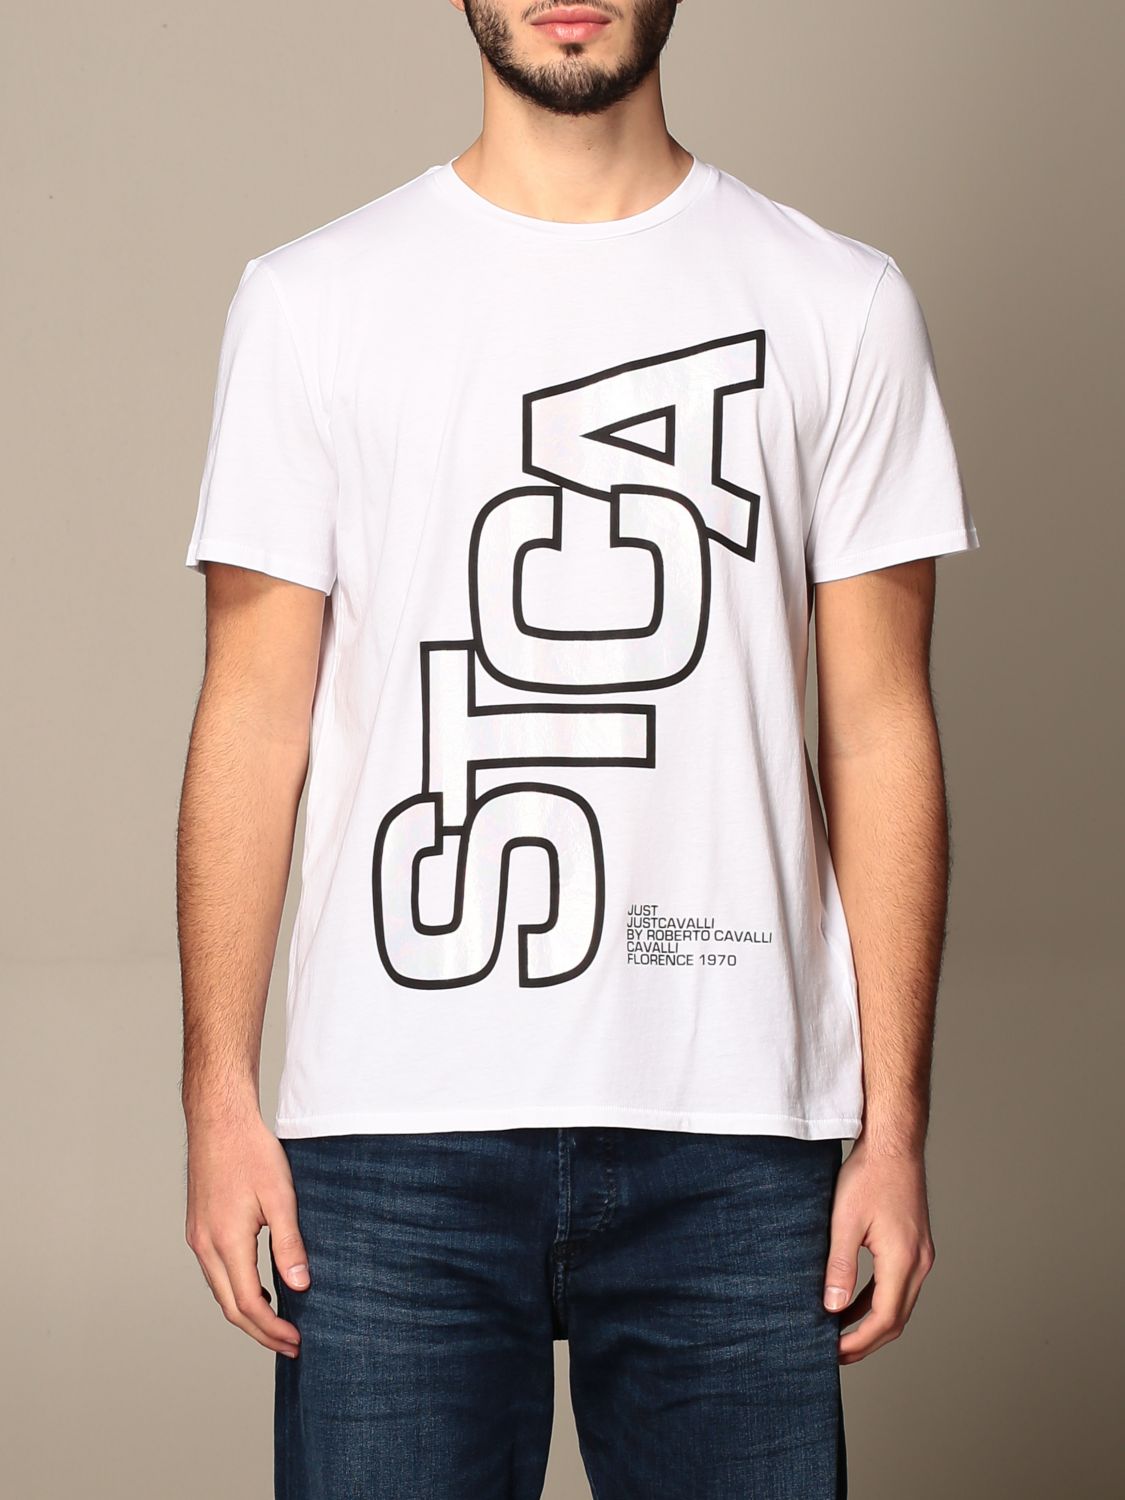 sleuf kalligrafie Verlaten JUST CAVALLI: T-shirt with logo print - White | Just Cavalli t-shirt  S01GC0669 N20663 online on GIGLIO.COM